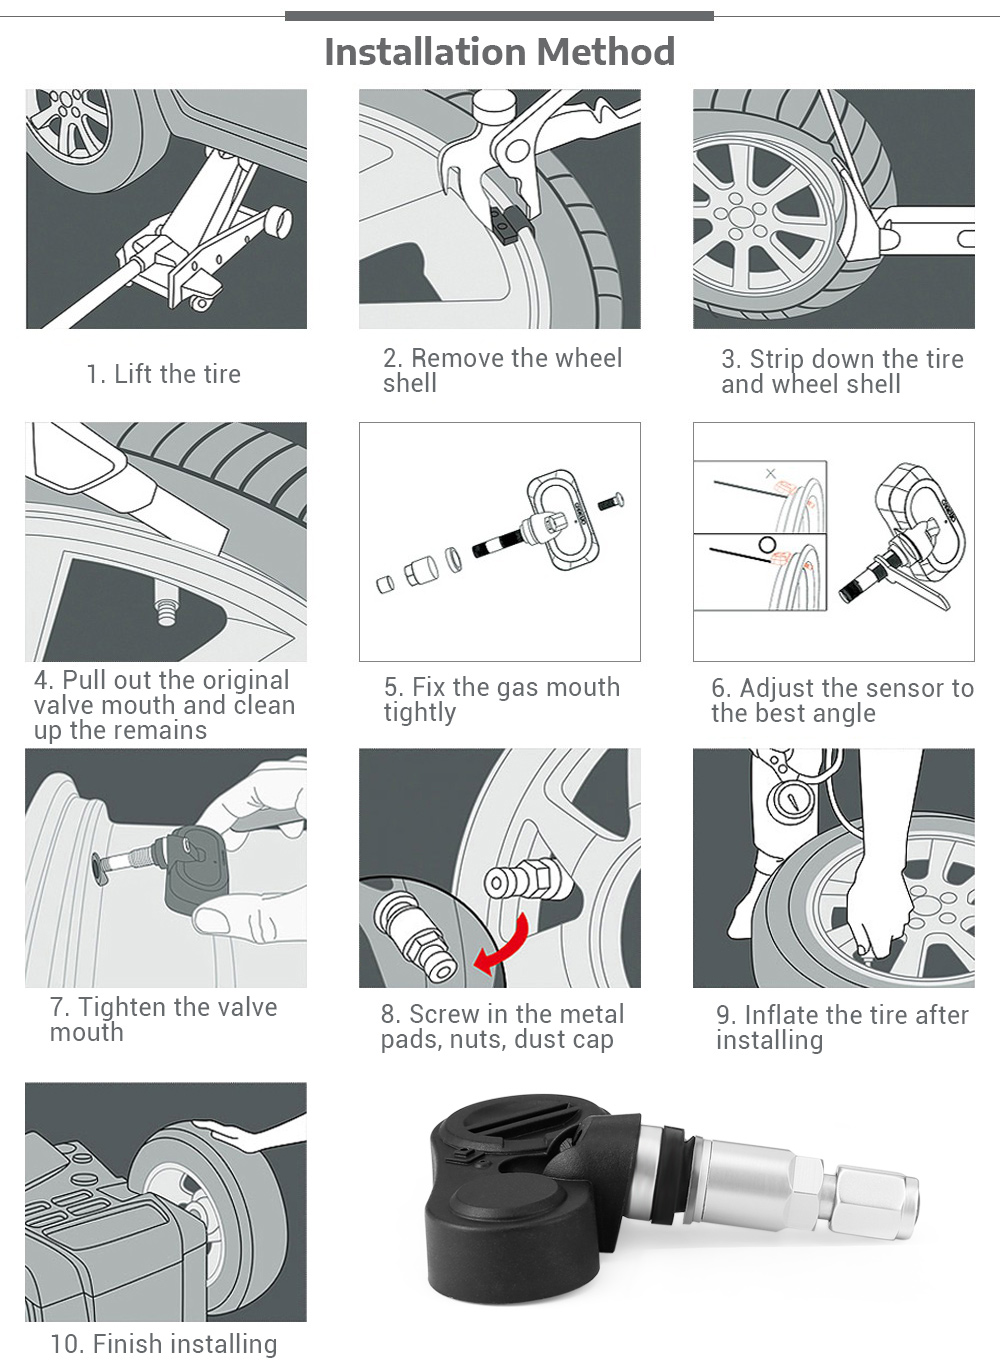 Car Internal Standard Sensor for Tire Pressure Monitoring System